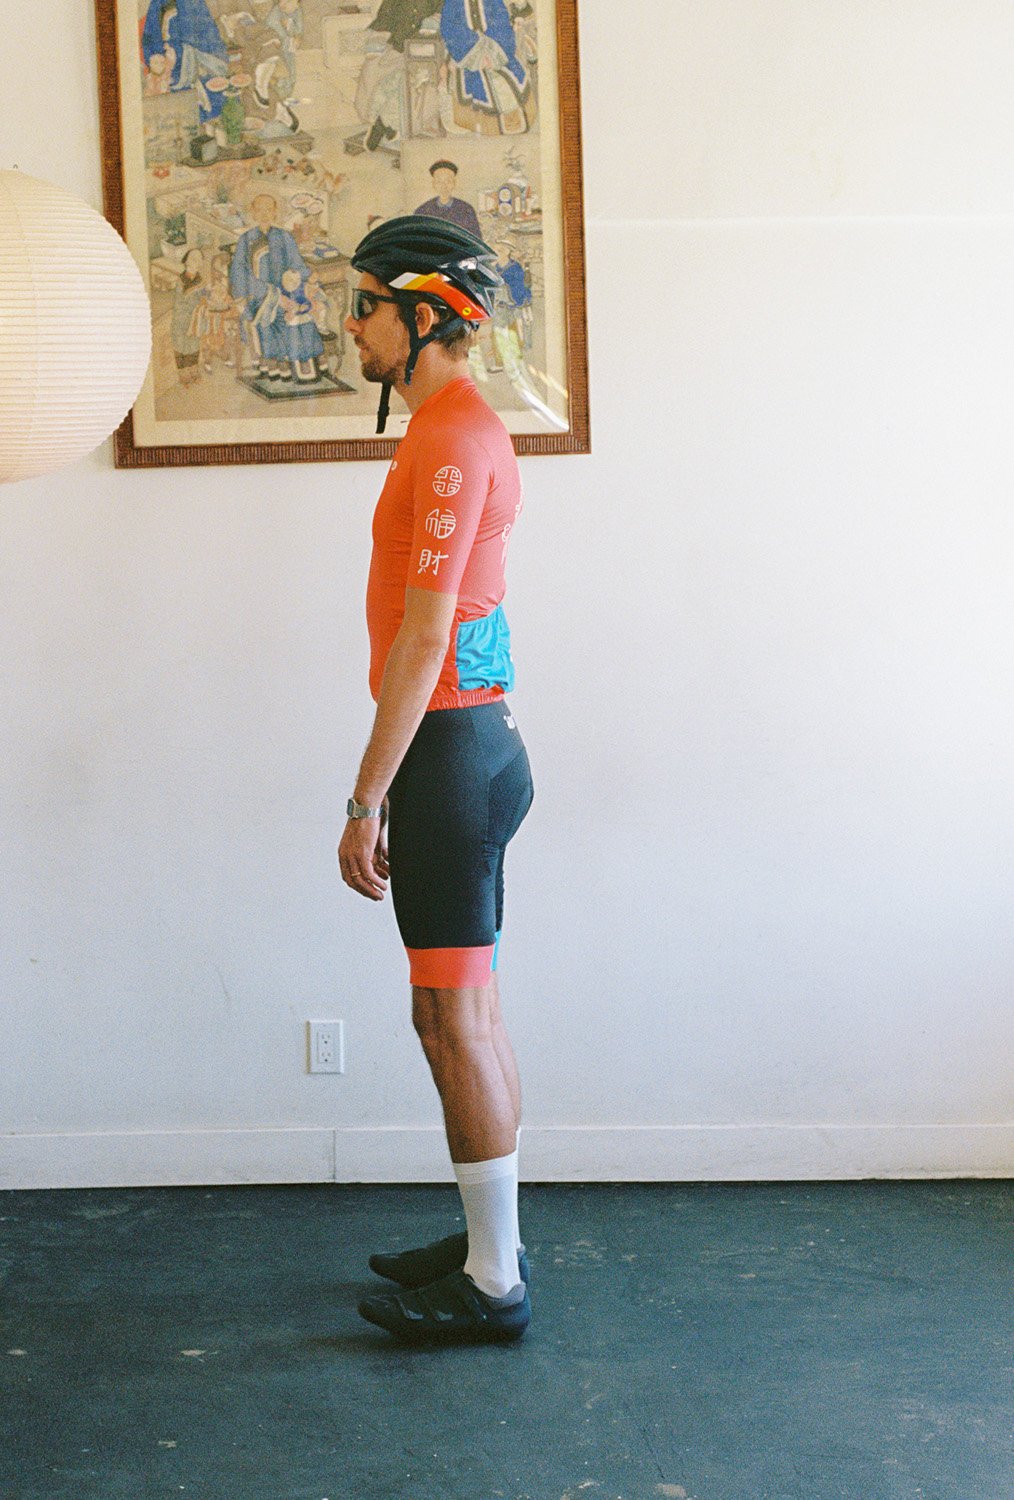 A man wearing a cycling uniform